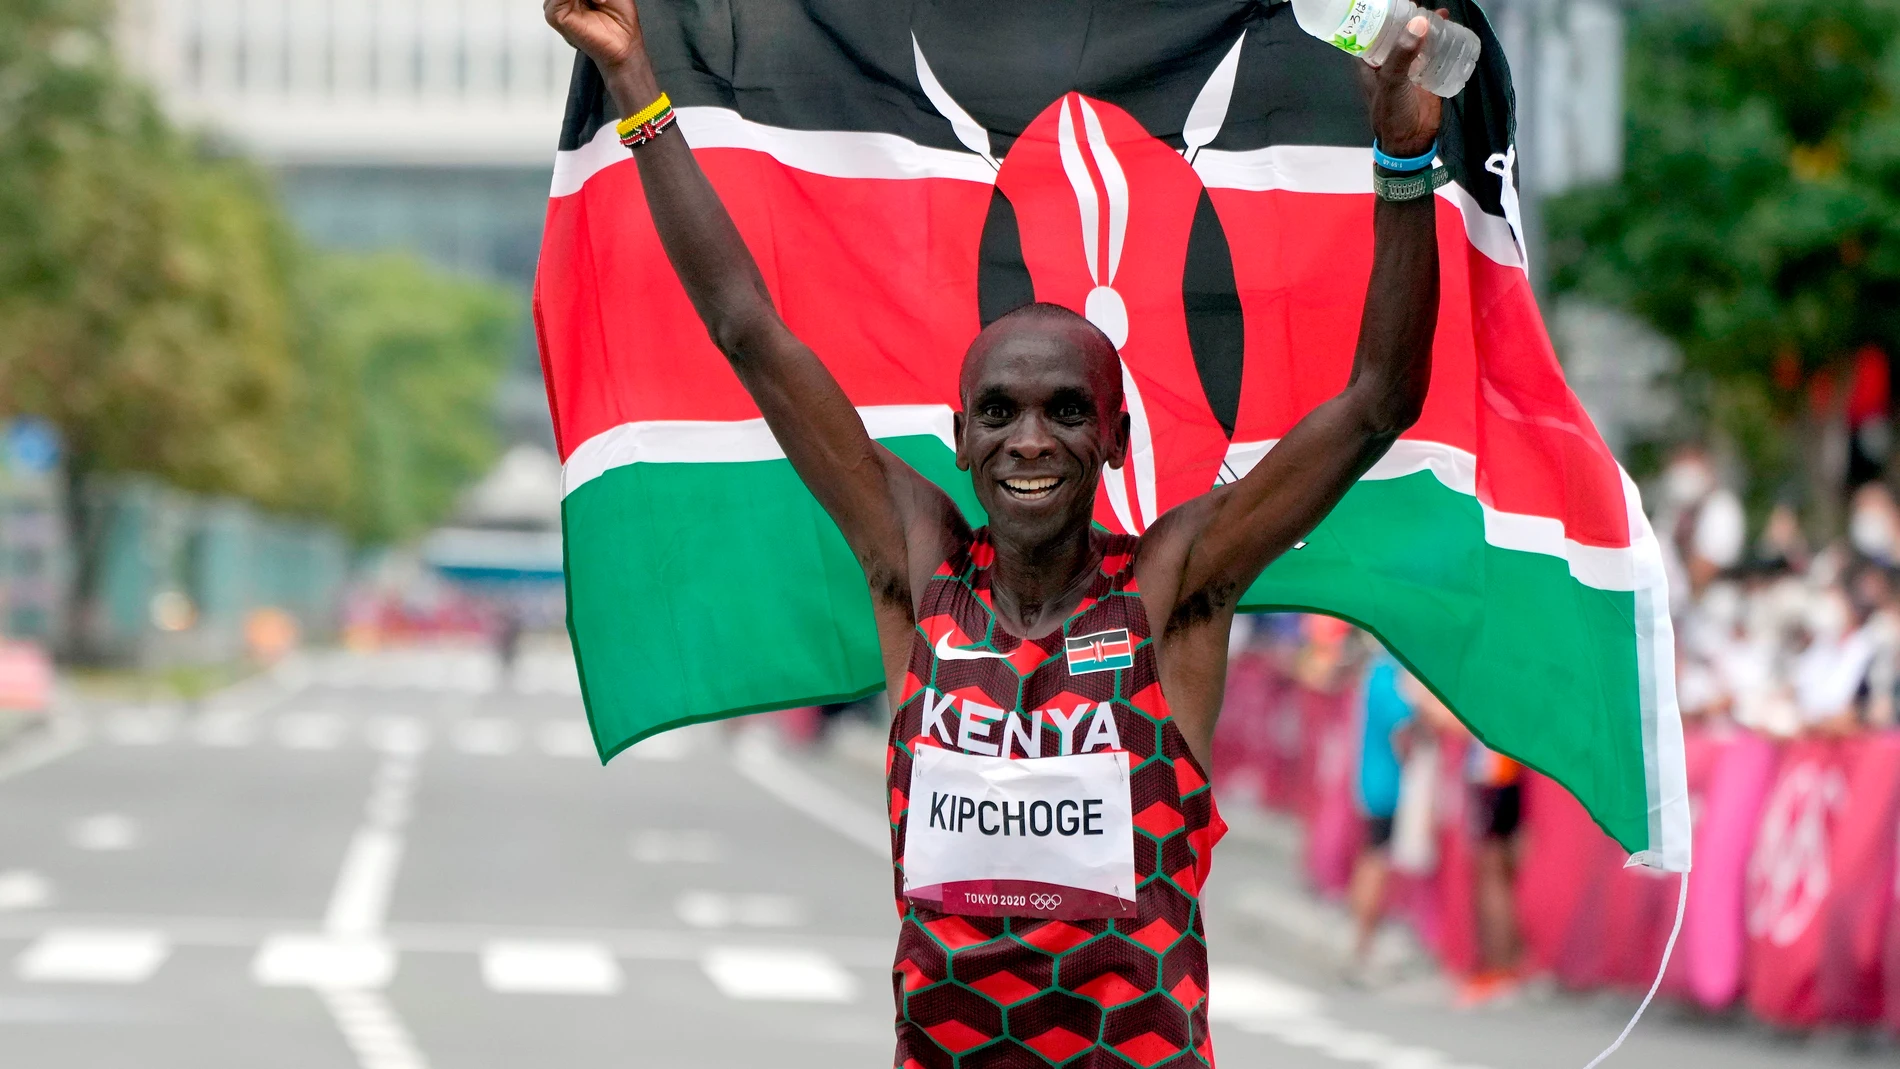 Kipchoge agranda su leyenda y gana su segundo oro olímpico seguido en la maratón